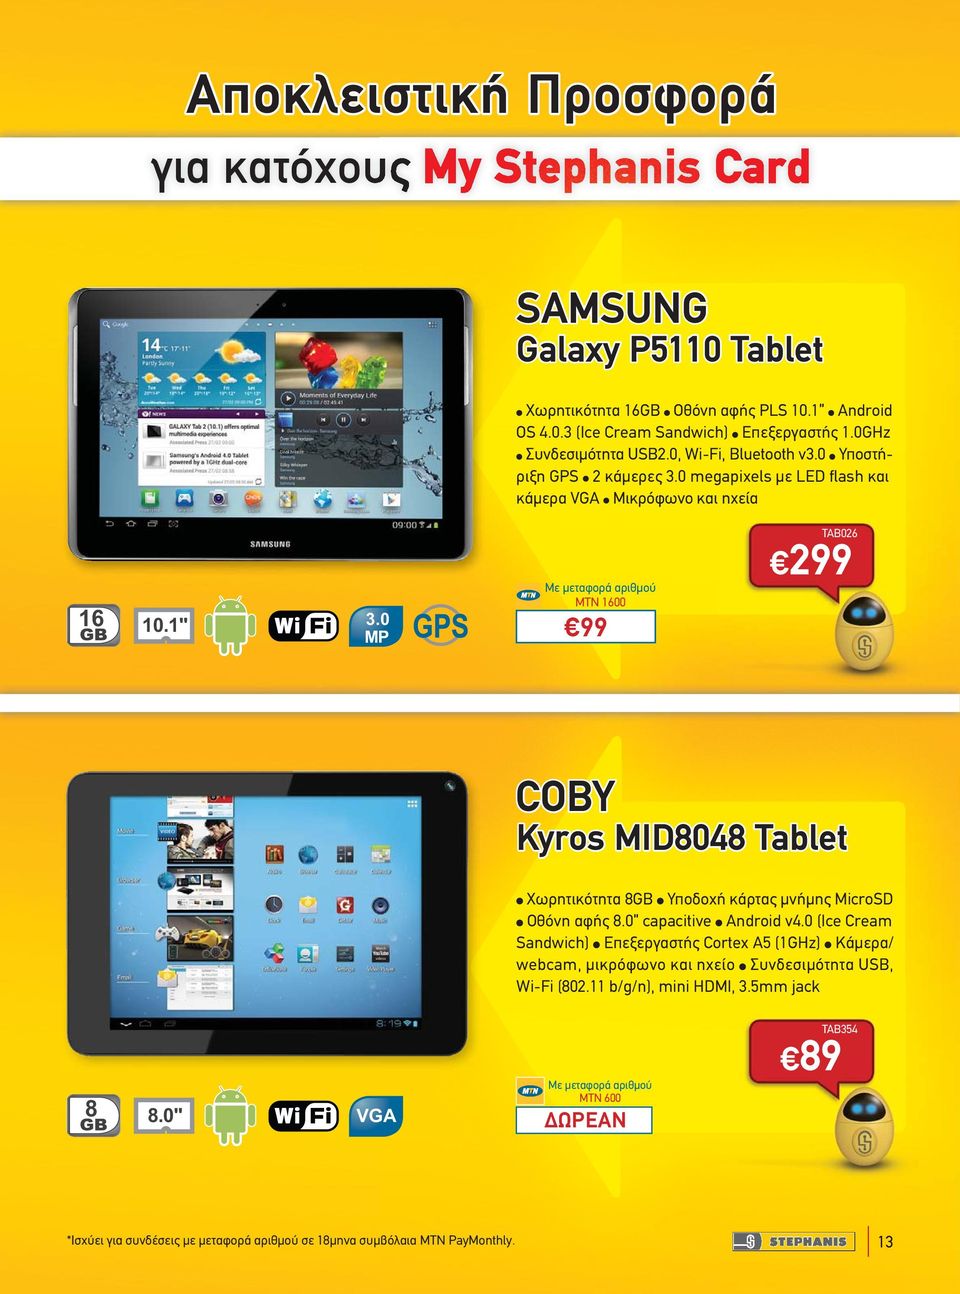 0 99 299 TAB026 COBY Kyros MID8048 Tablet Χωρητικότητα 8GB Υποδοχή κάρτας μνήμης MicroSD Oθόνη αφής 8.0 capacitive Android v4.